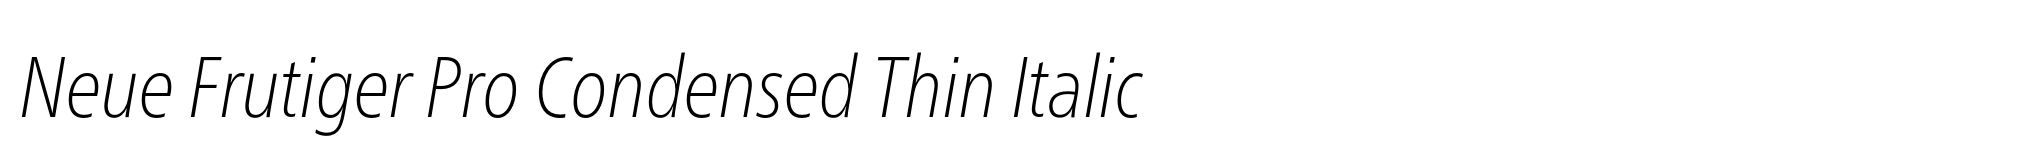 Neue Frutiger Pro Condensed Thin Italic image